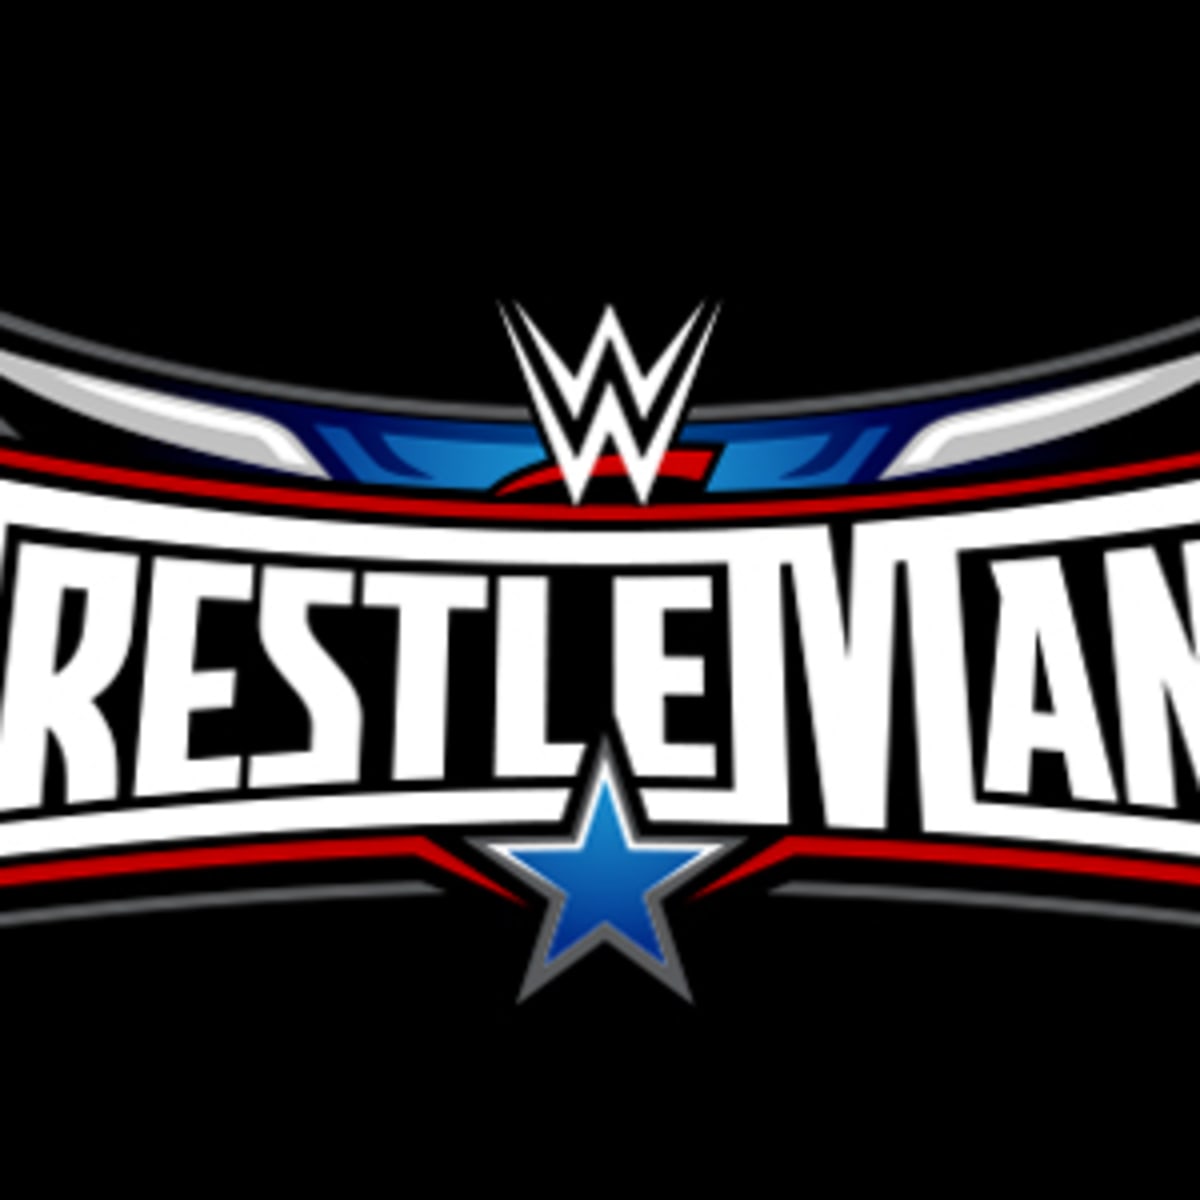 WWF WWE WrestleMania 24 Ring Ramp Entrance Logo set Orlando FL